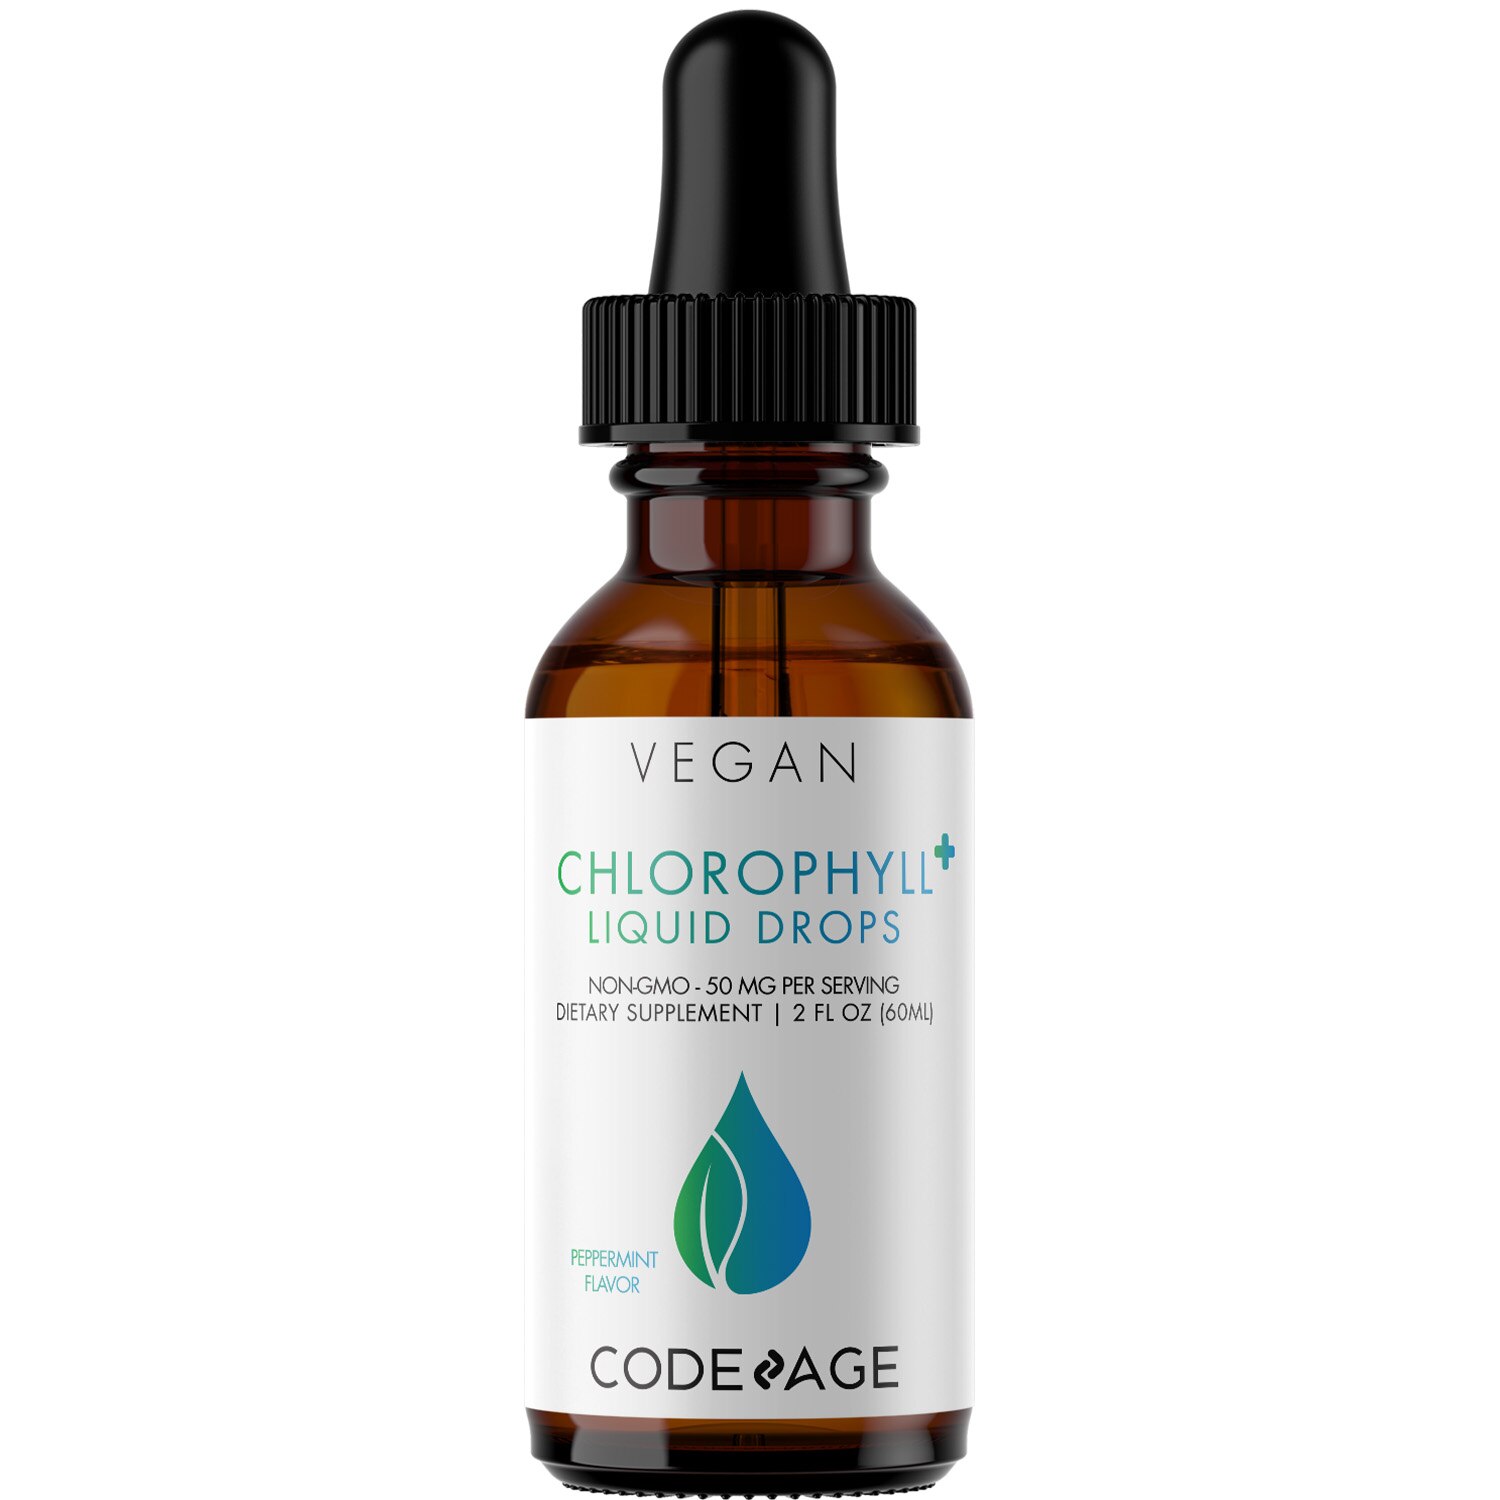 Codeage Vegan Chlorophyll Liquid Drops with Vegetable Glycerin, Peppermint Oil Flavor, 2 OZ